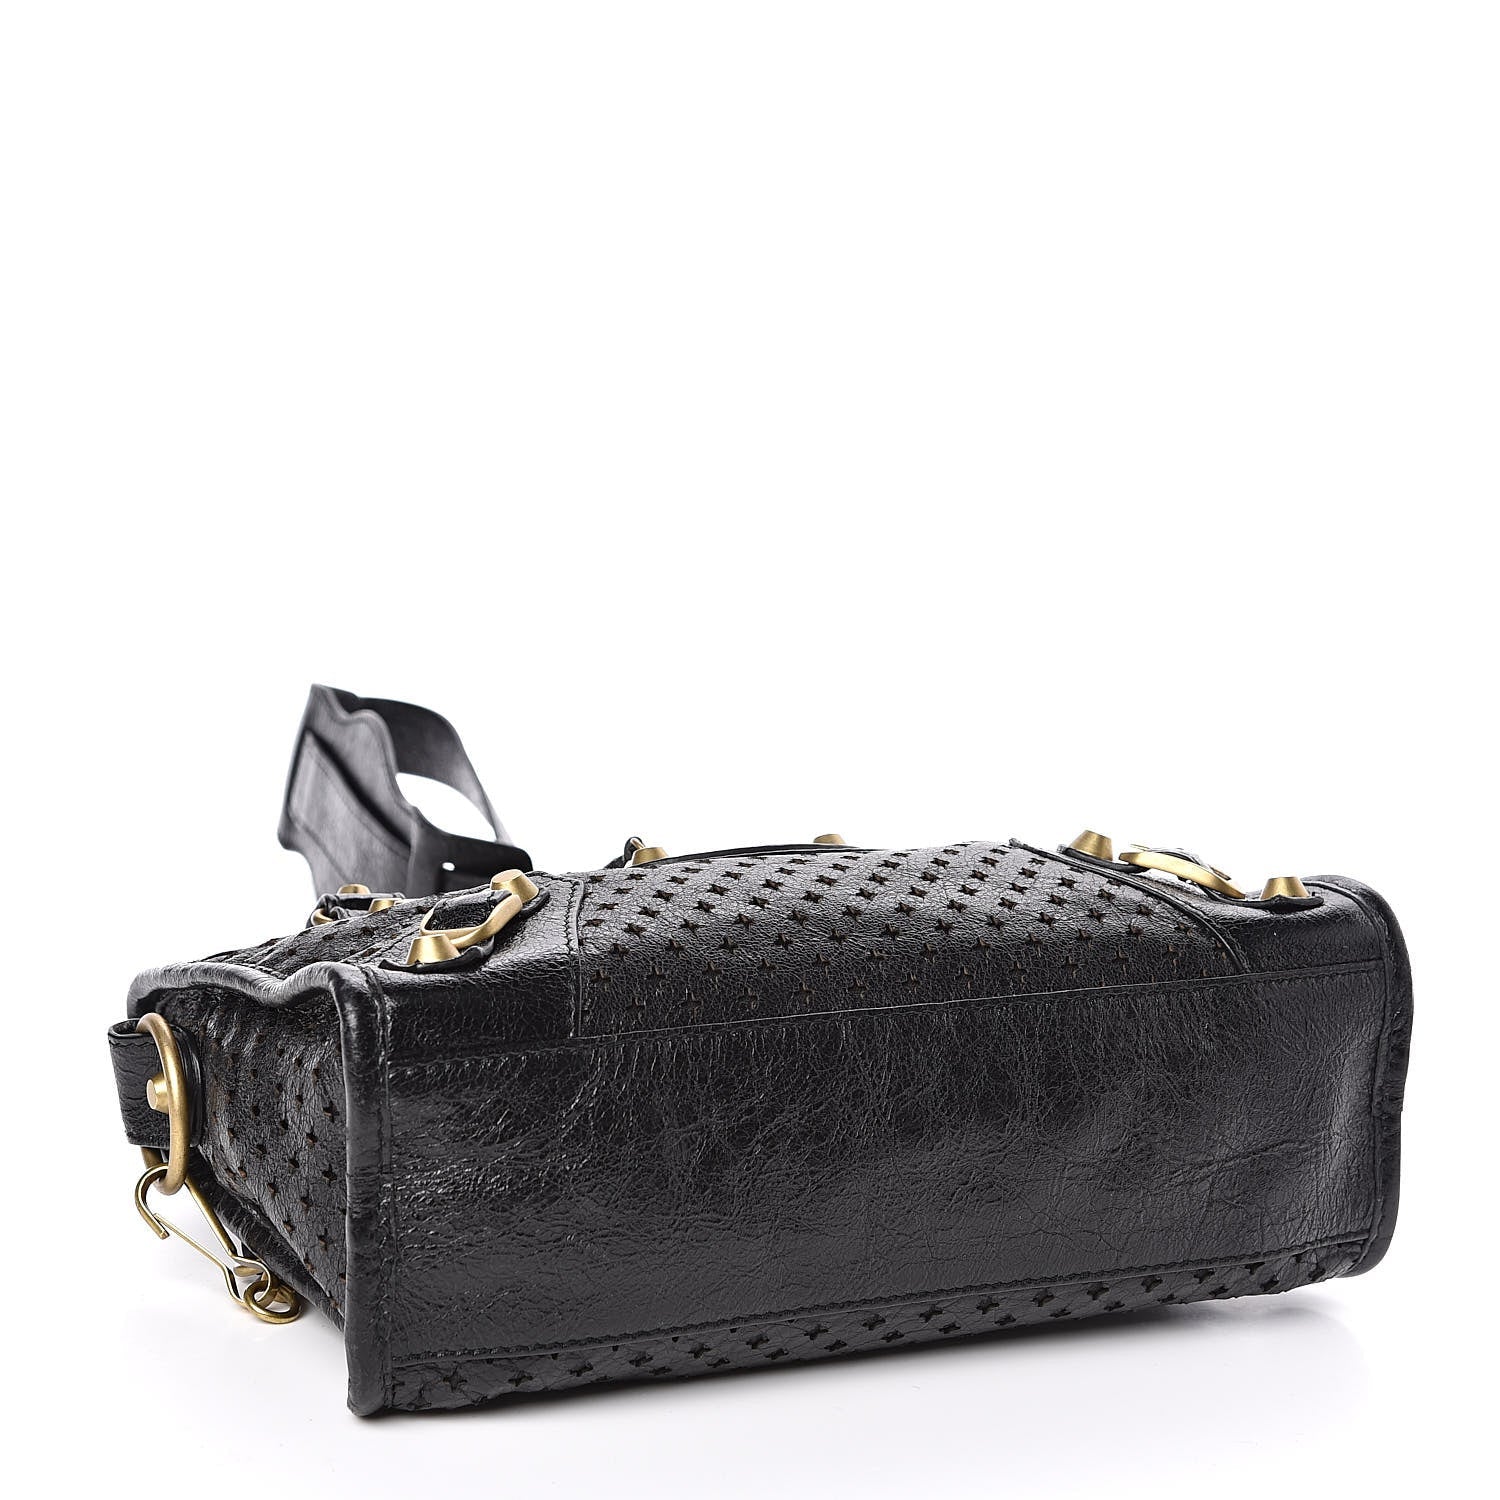 Balenciaga Classic City Black Leather Perforated Mini Satchel Bag 501065